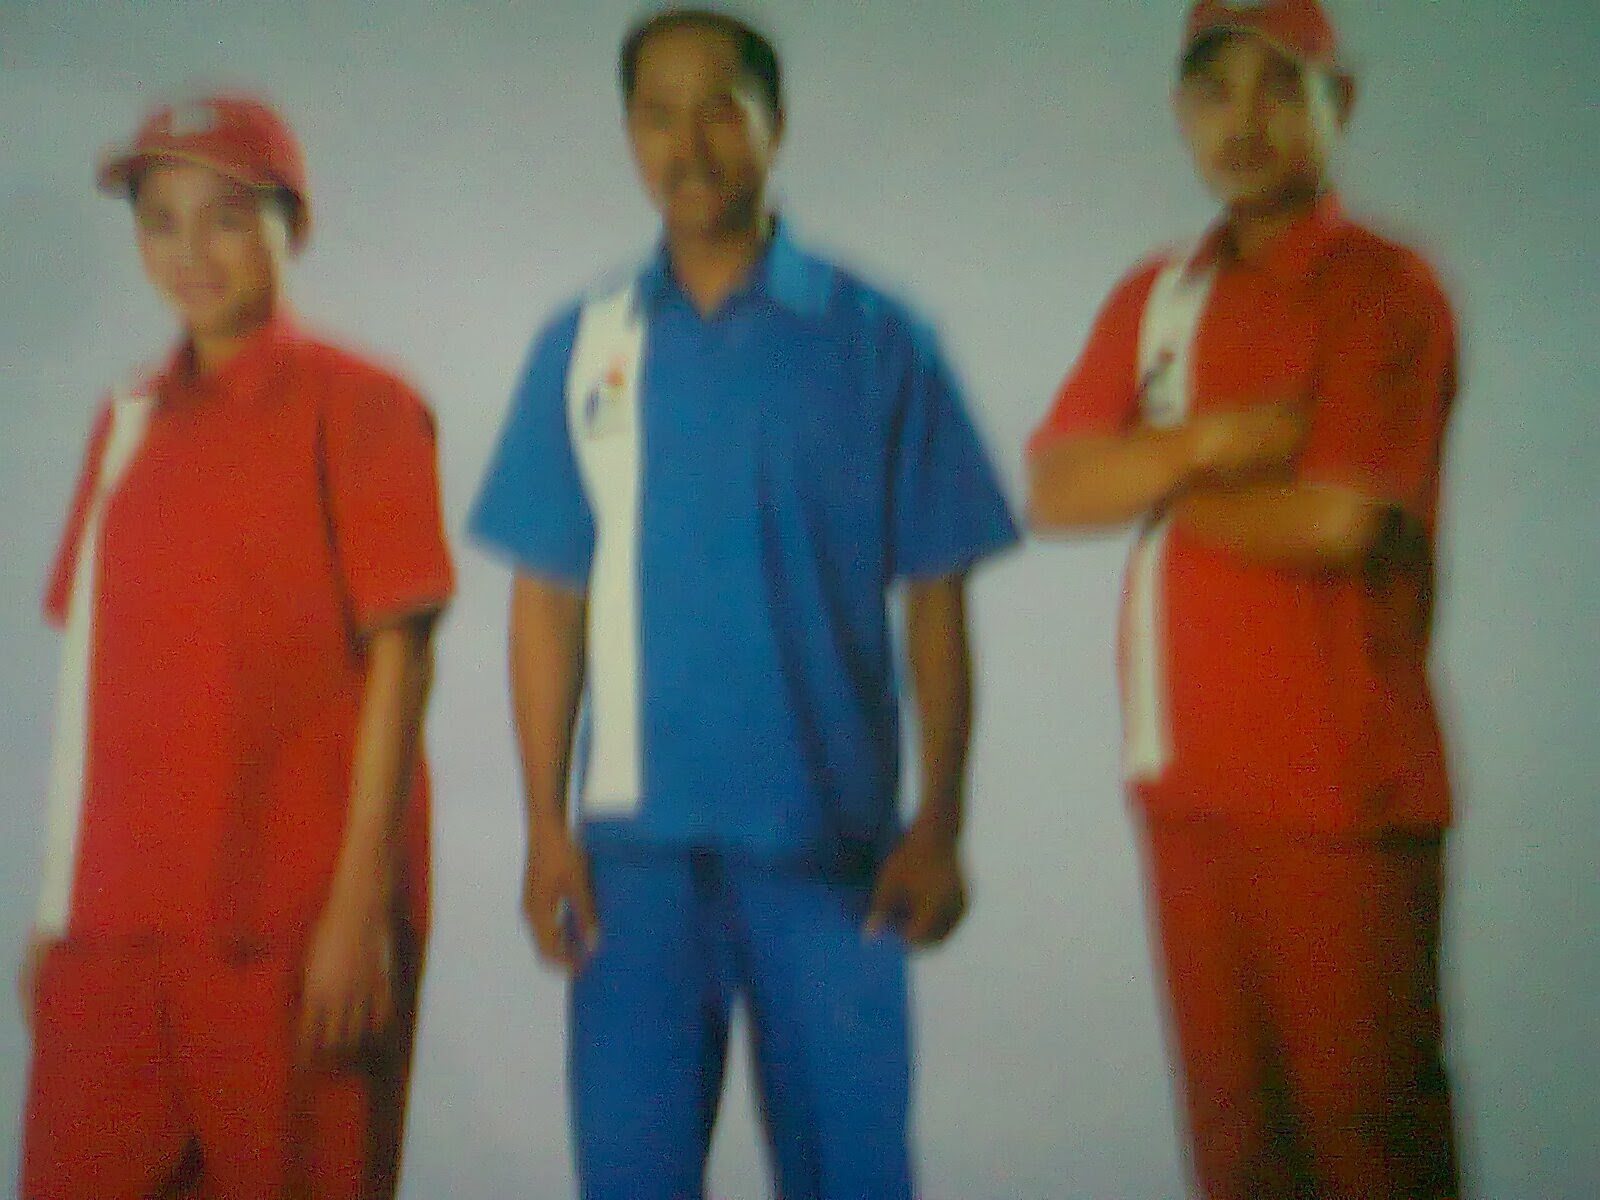 Sample of uniform company